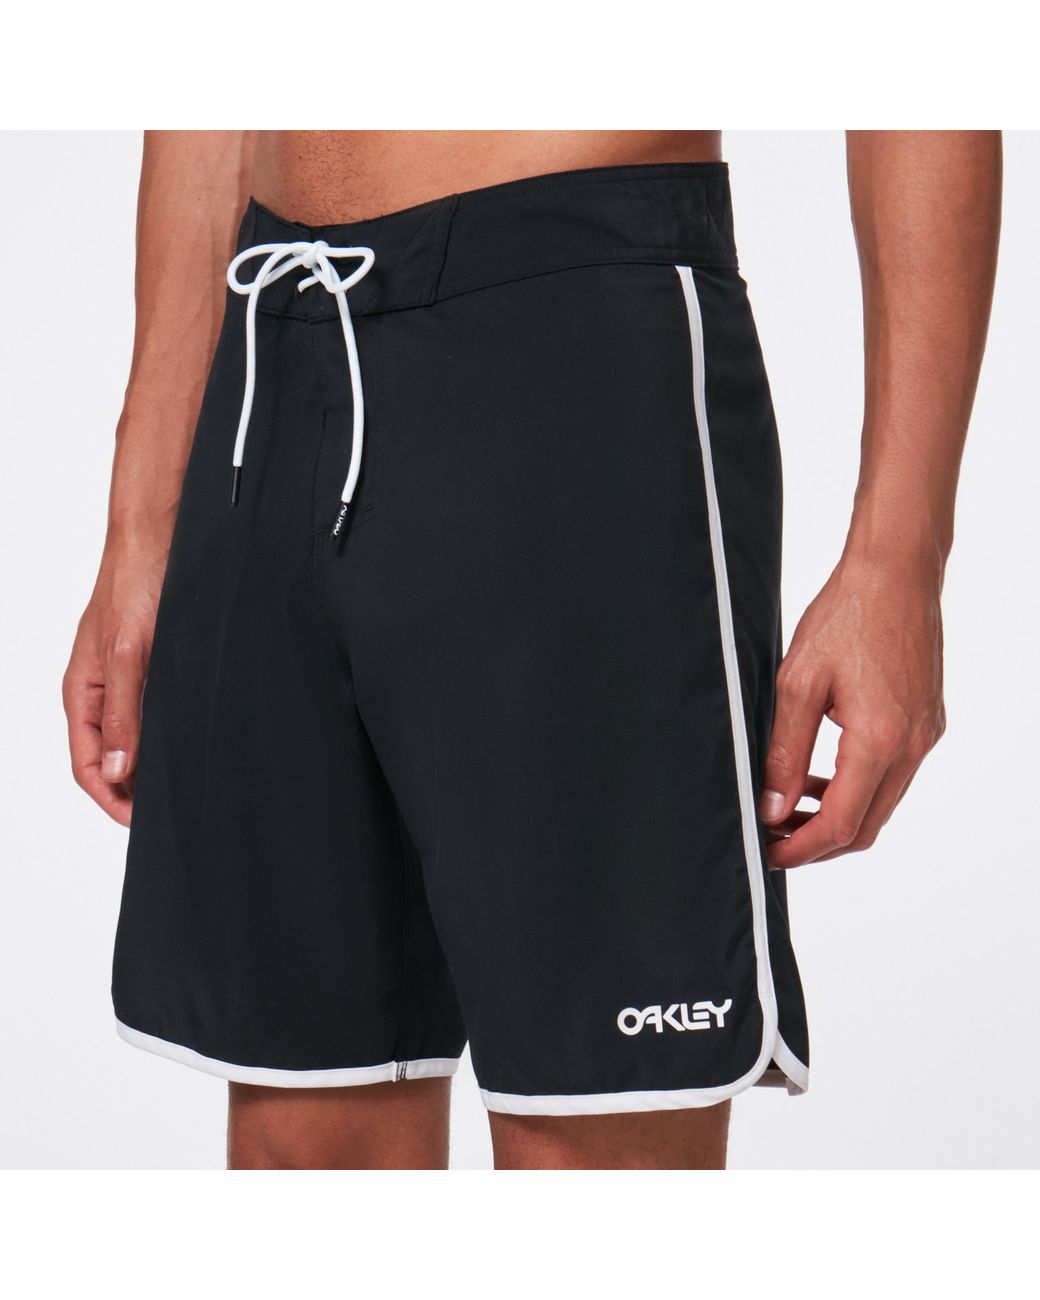 Oakley Solid Crest 19 Boardshort in Black for Men - Lyst